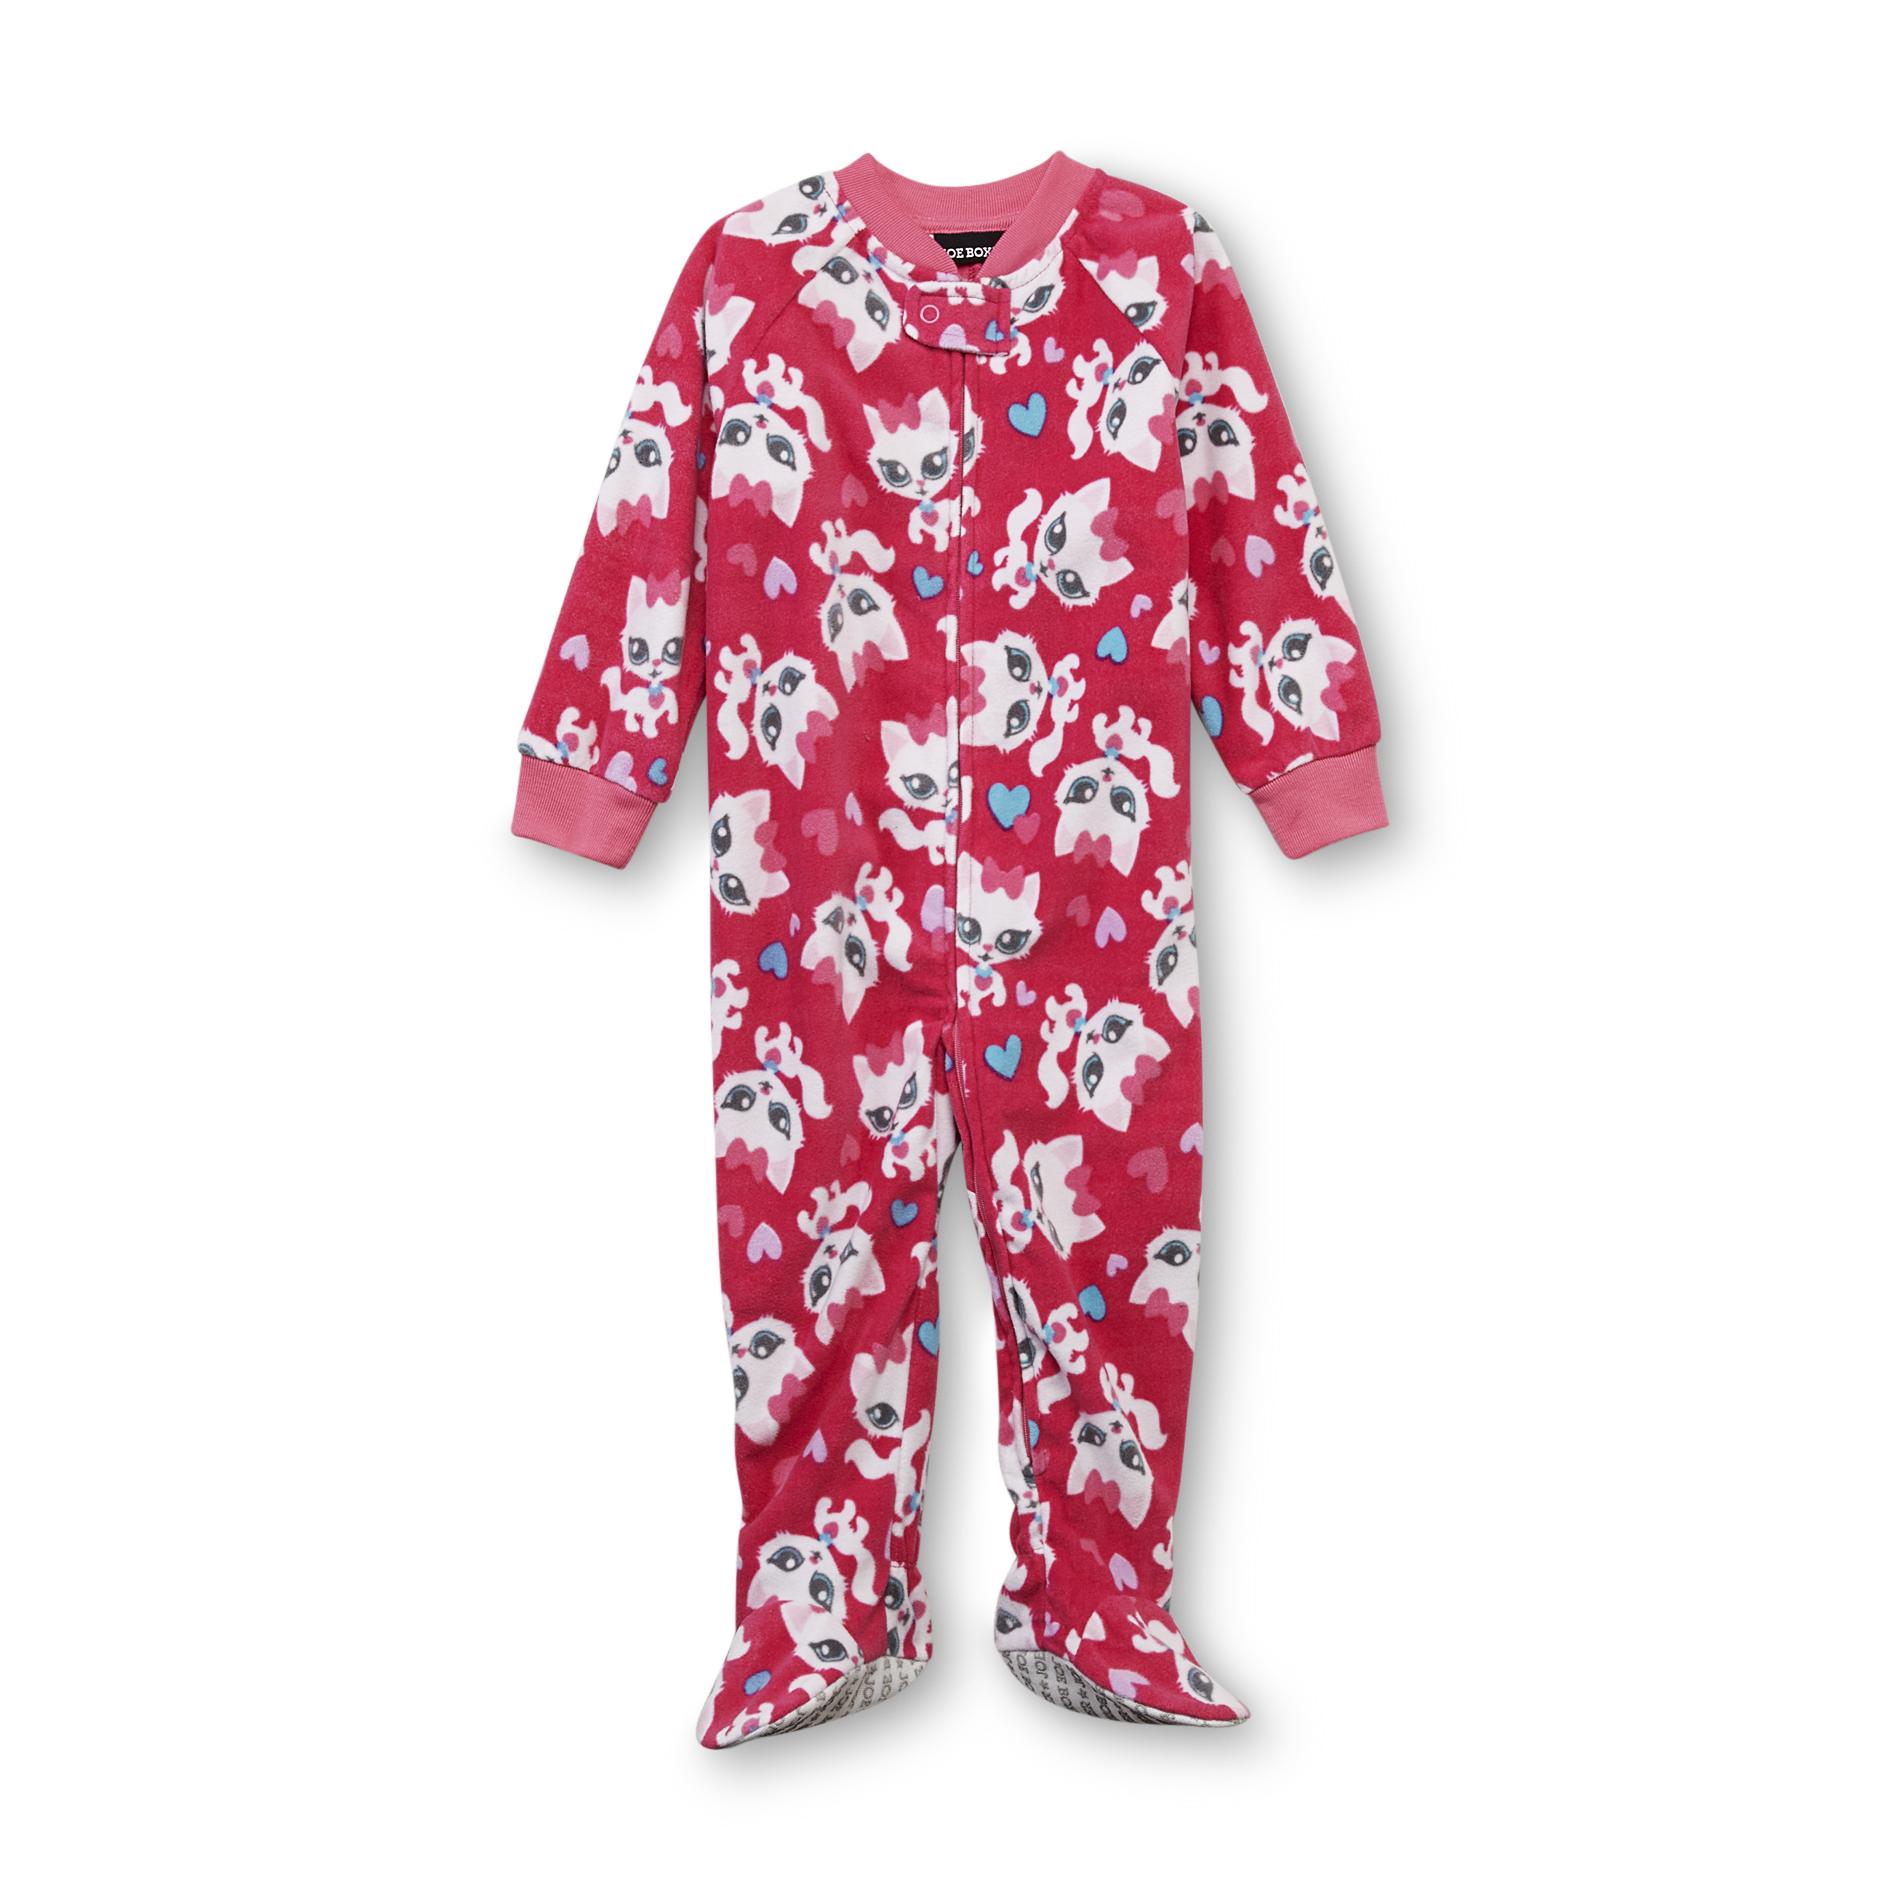 Joe Boxer Infant & Toddler Girl's Footed Blanket Sleeper Pajamas - Kittens